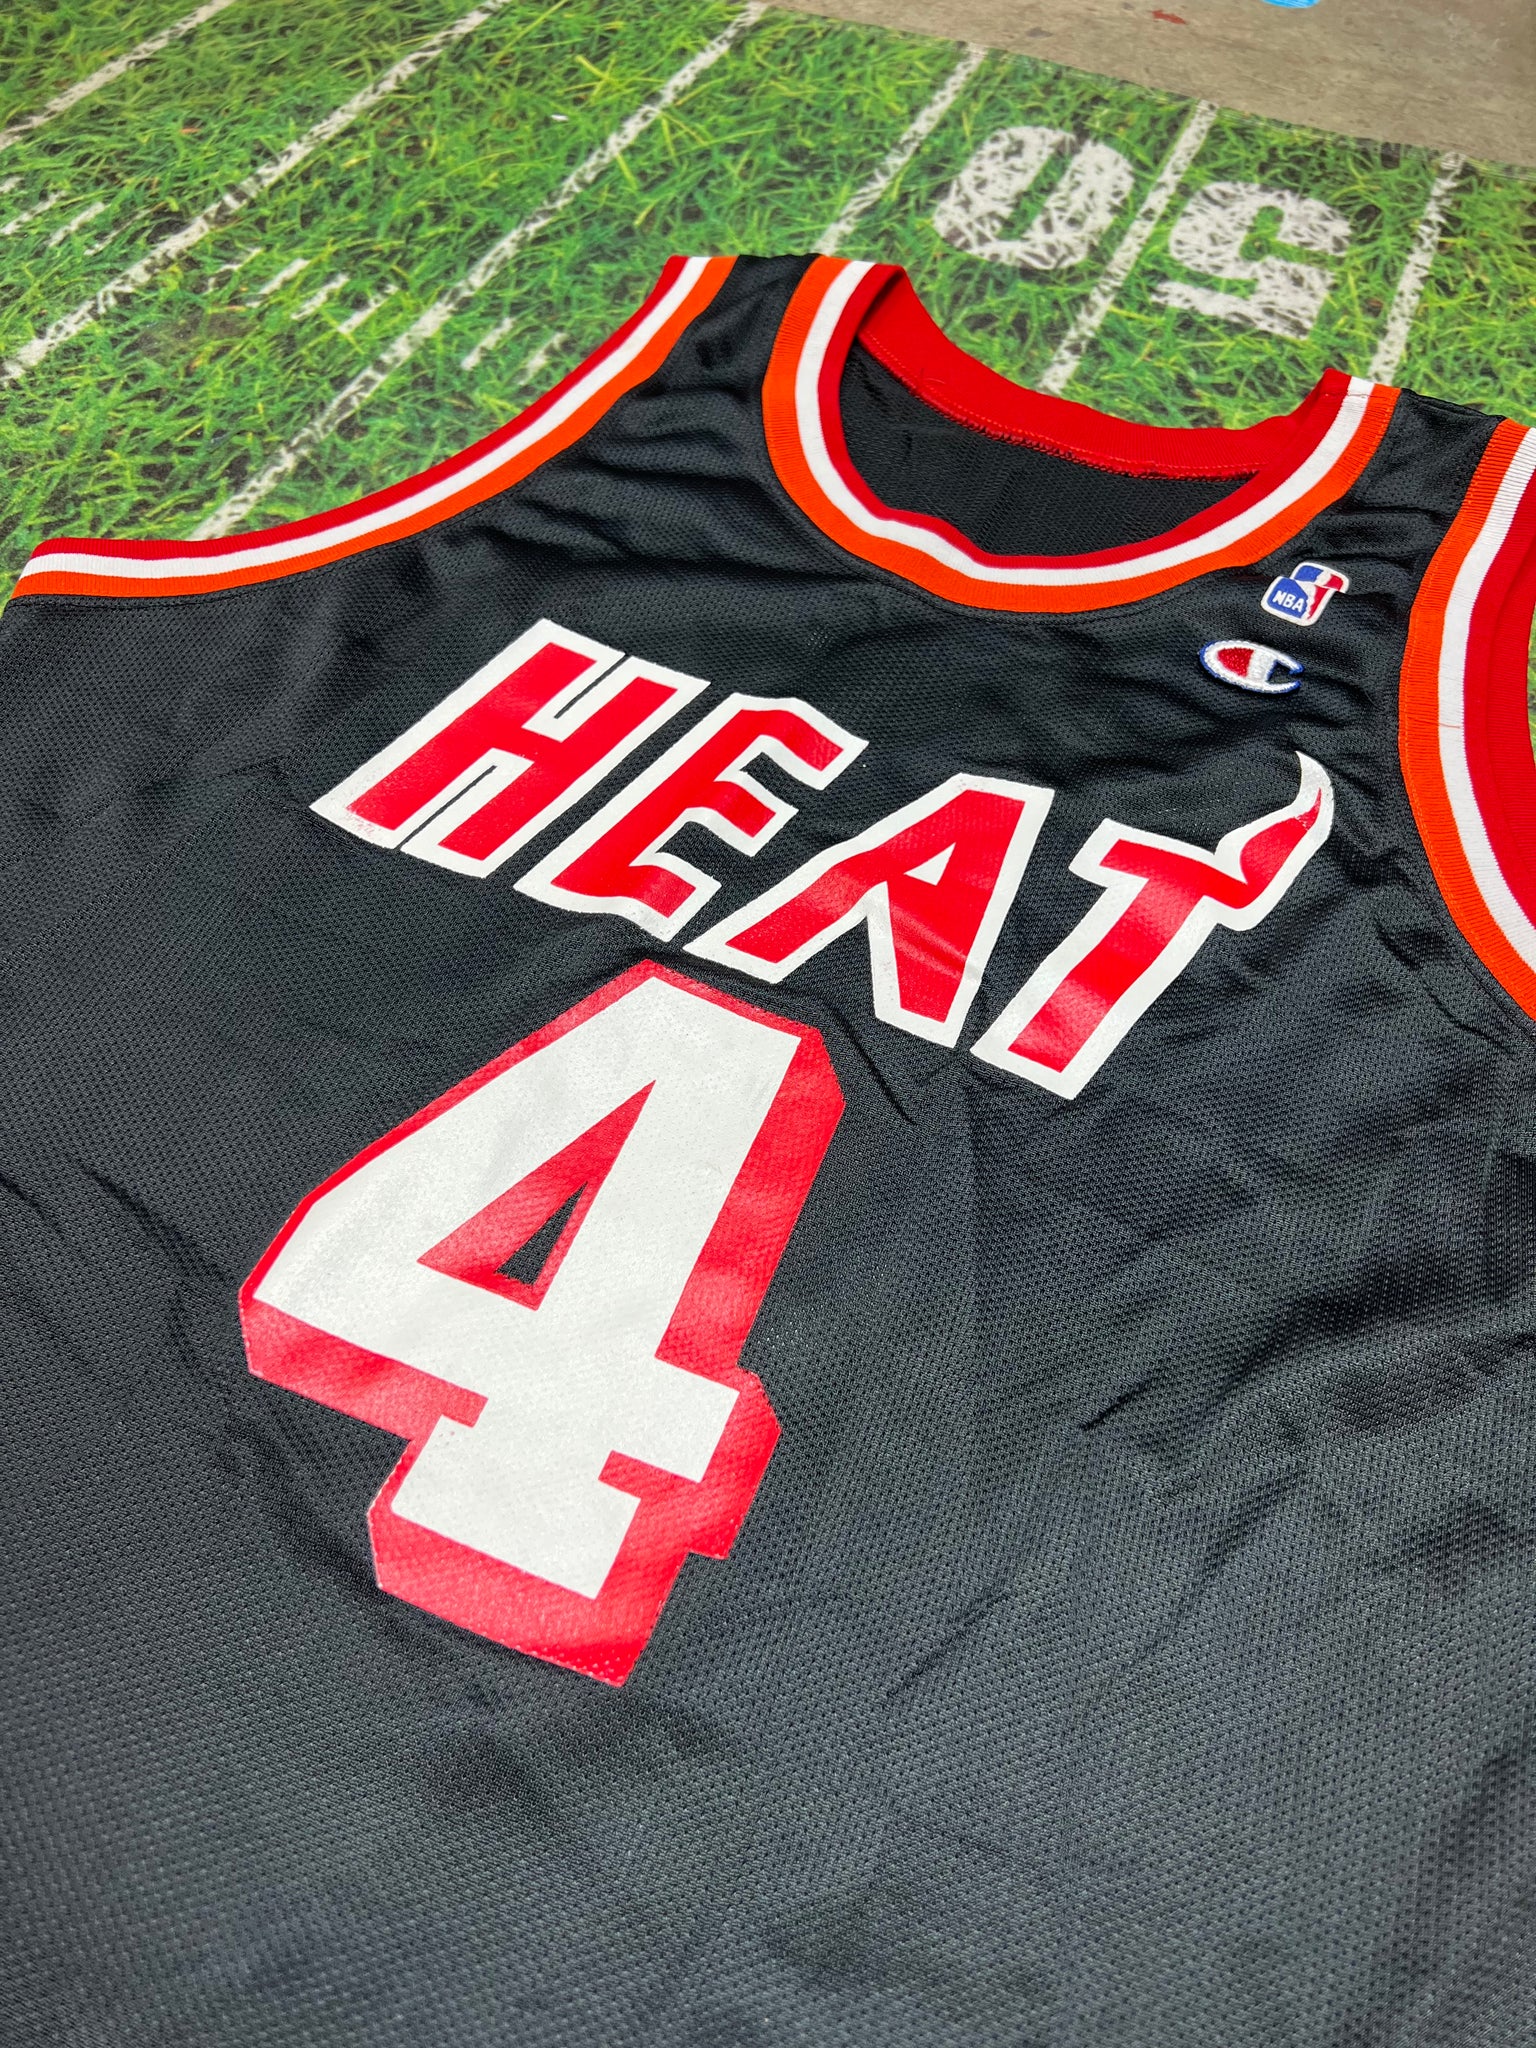 Miami Heat Vintage 90s Champion Basketball Shorts Red NBA 